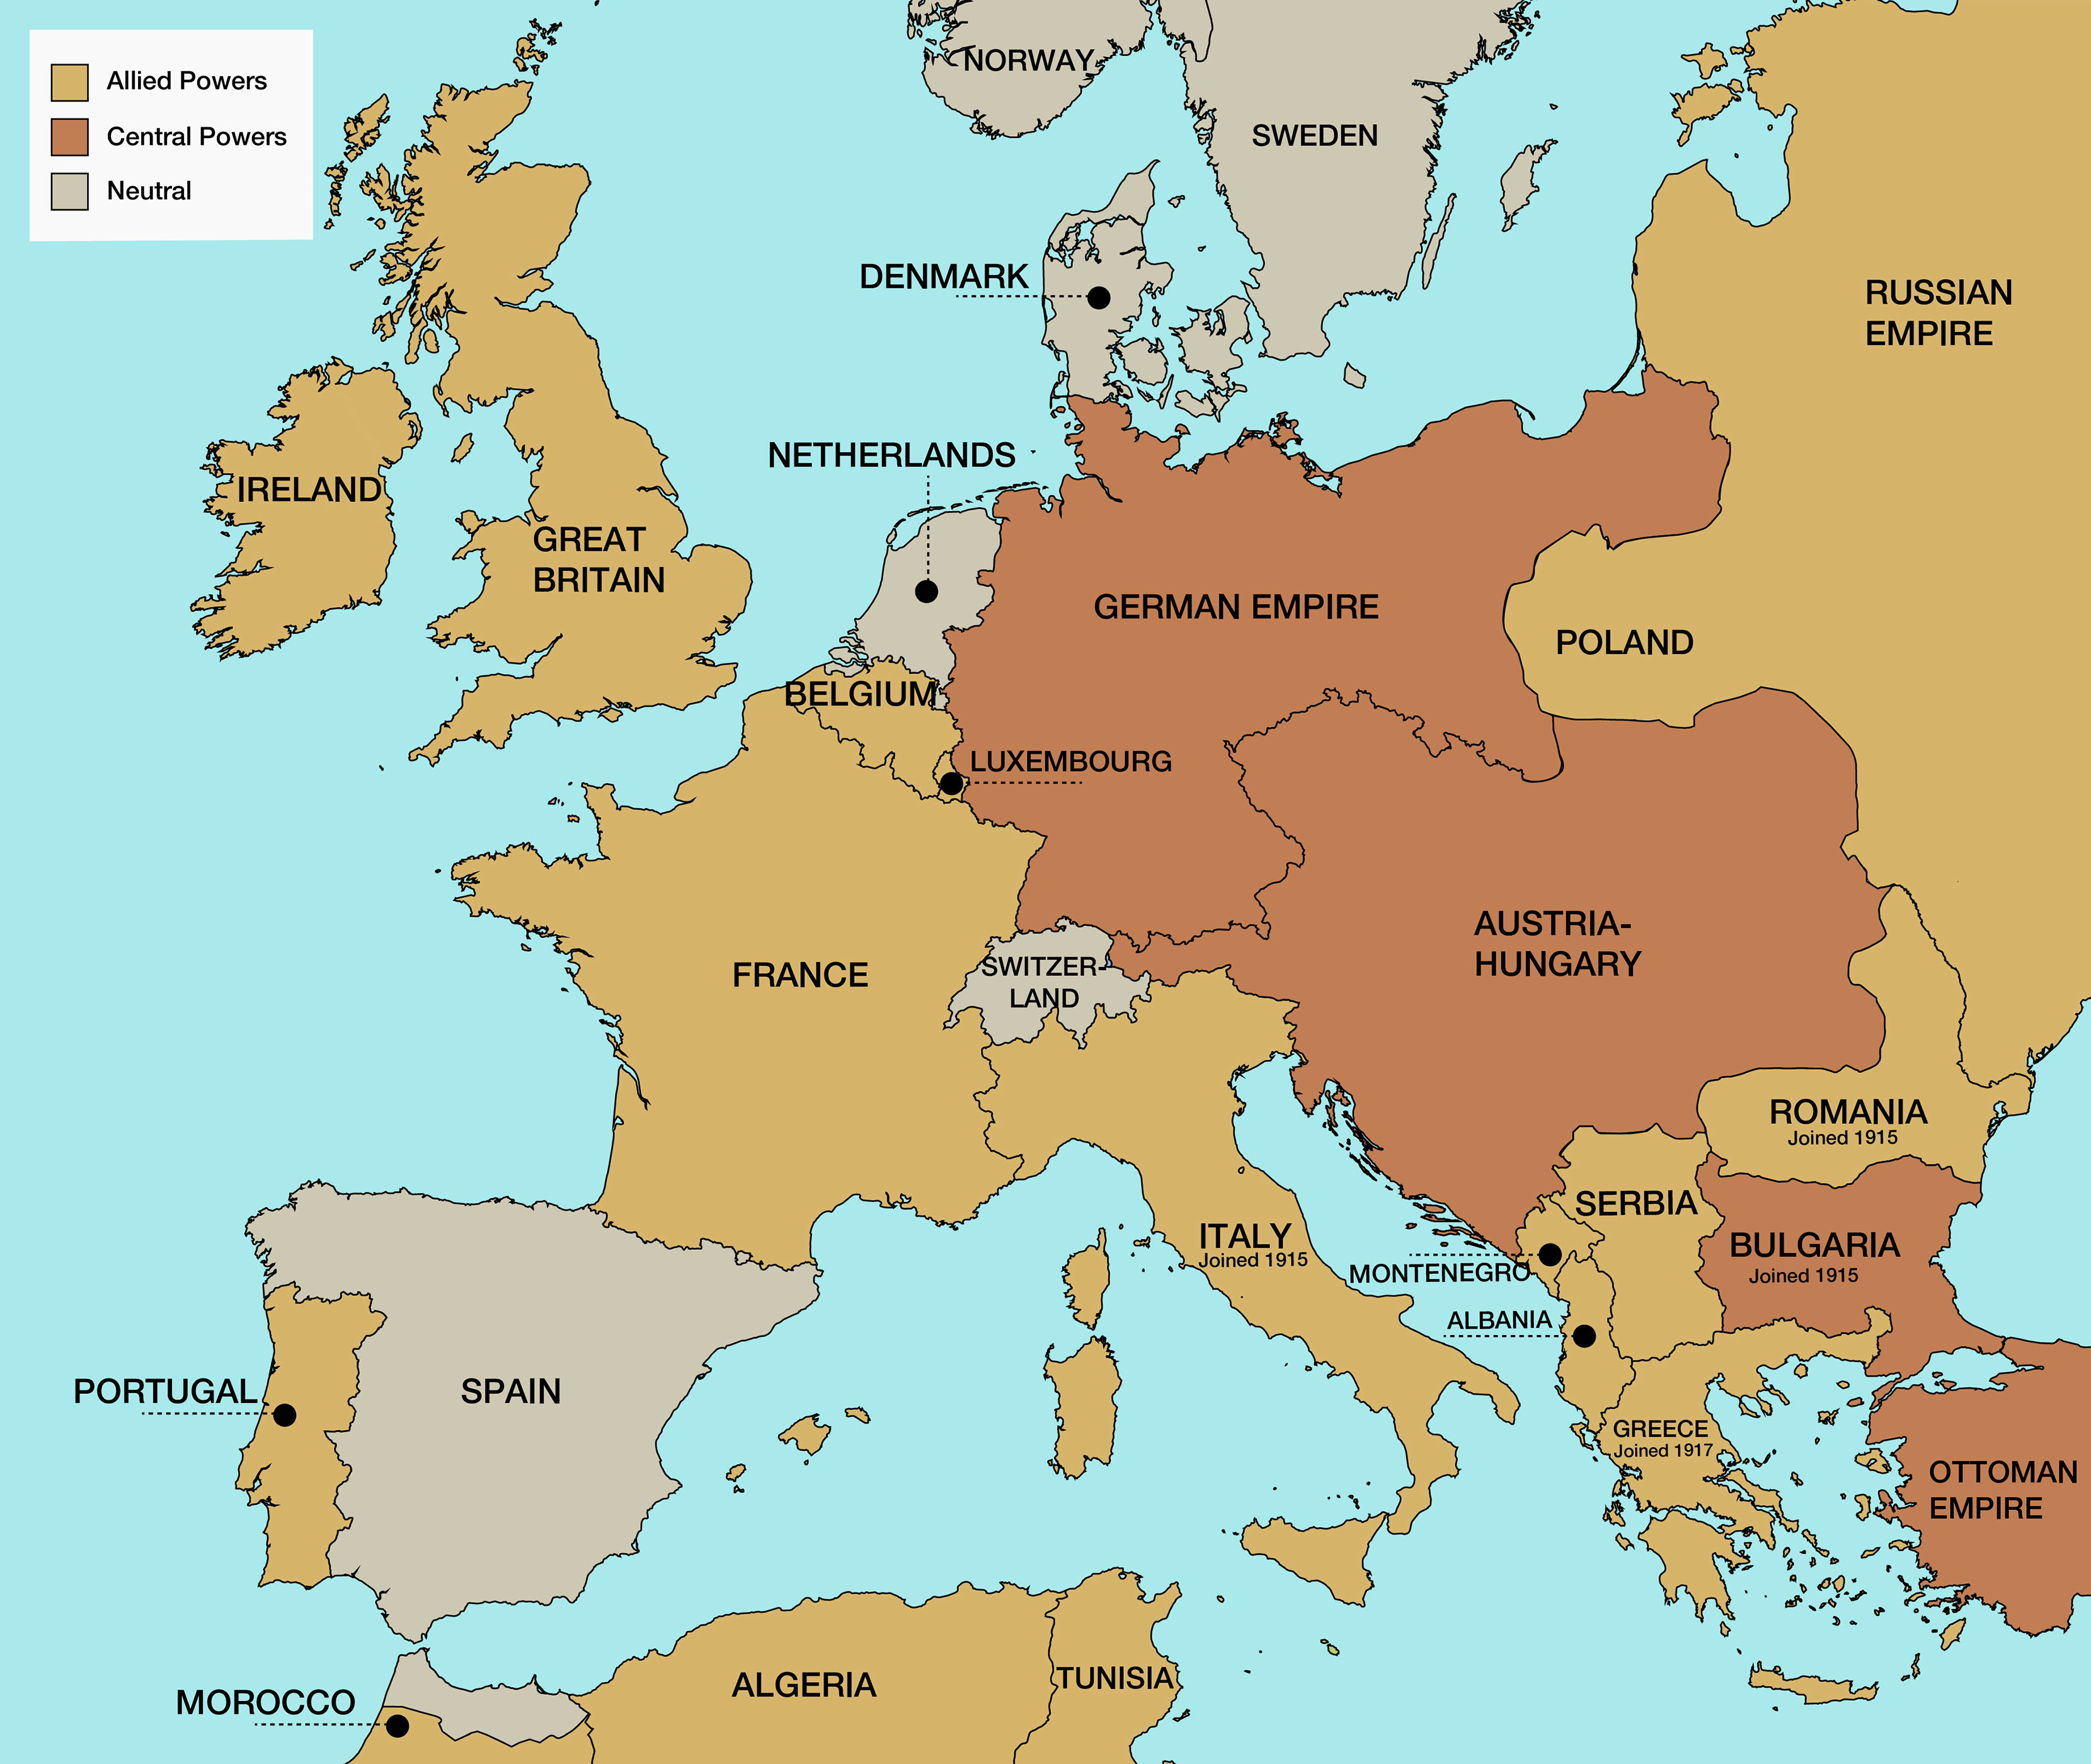 Map showing First World War alliances.